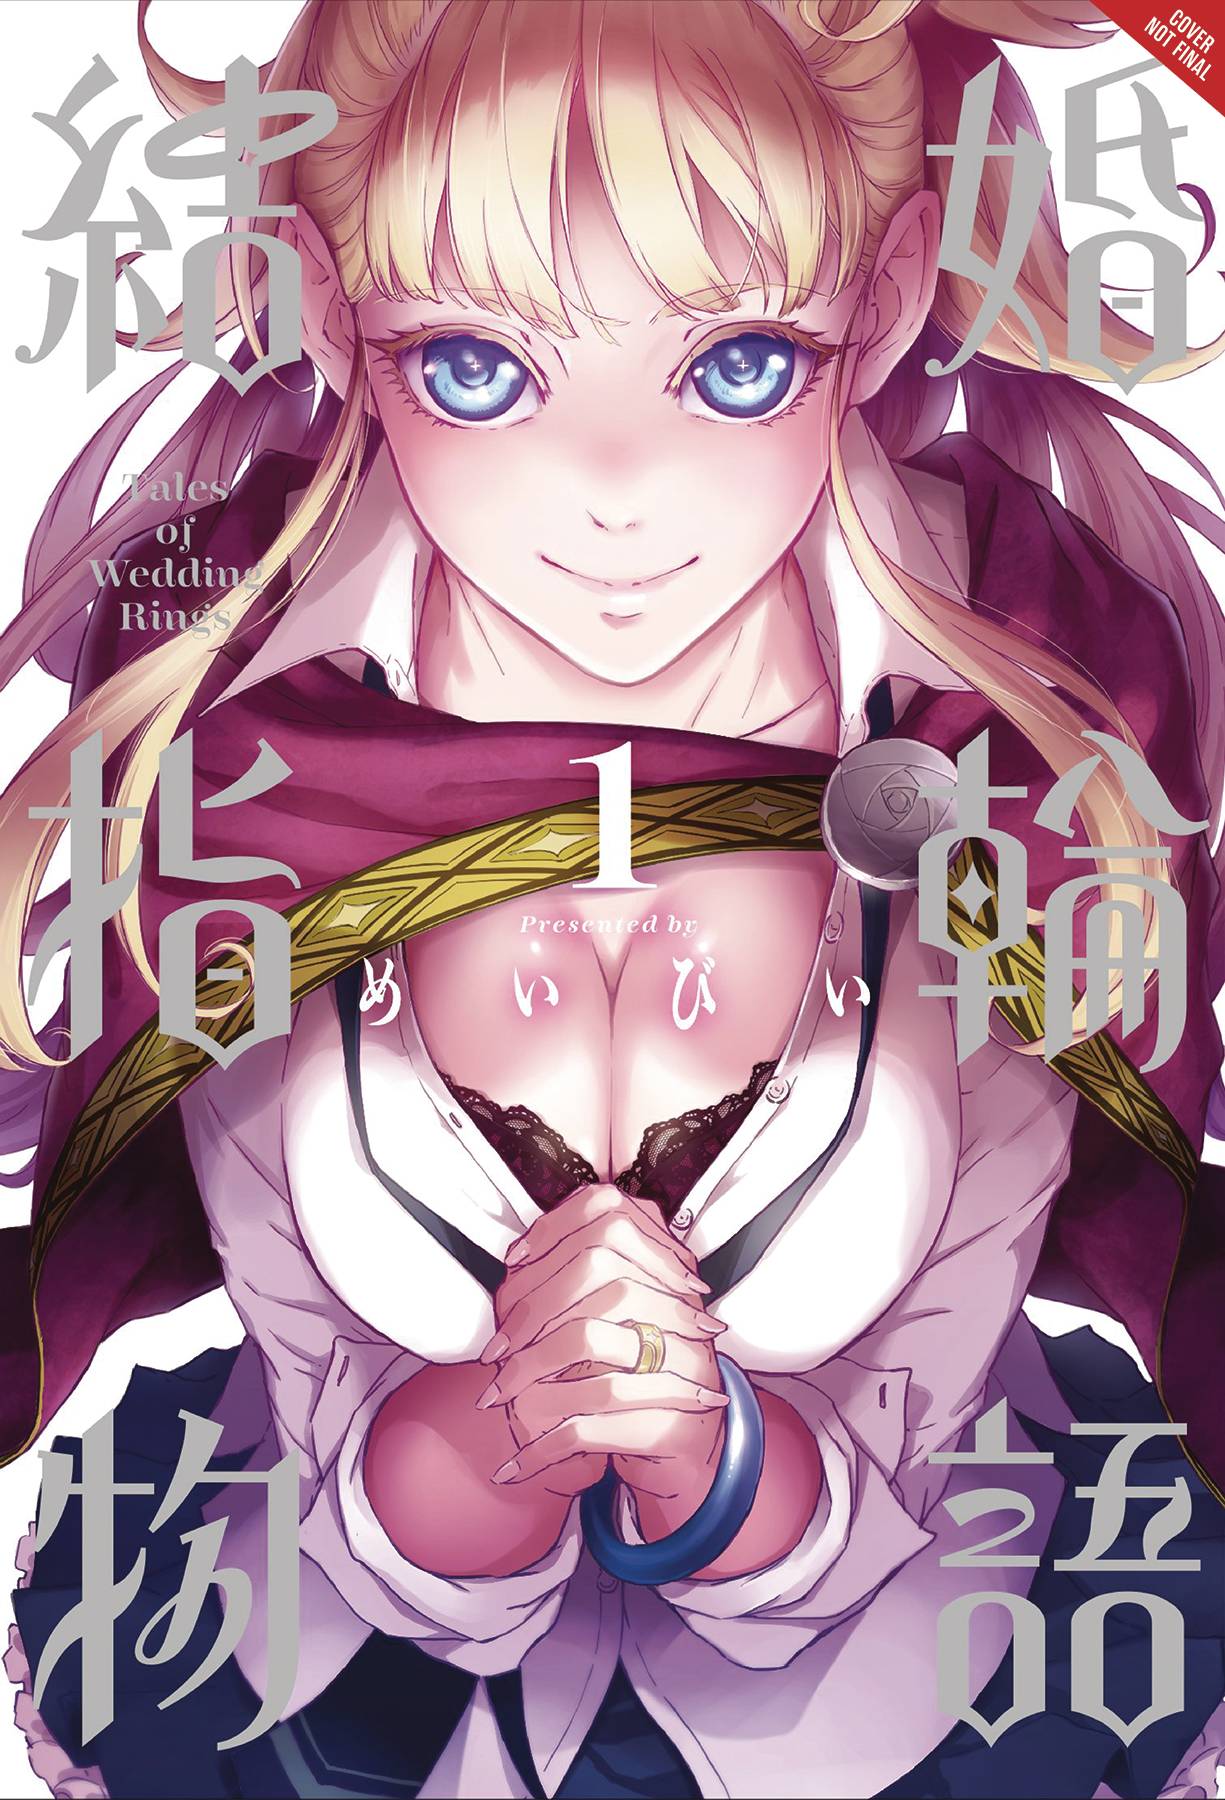 Tales of Wedding Rings Manga Volume 1 (Mature)